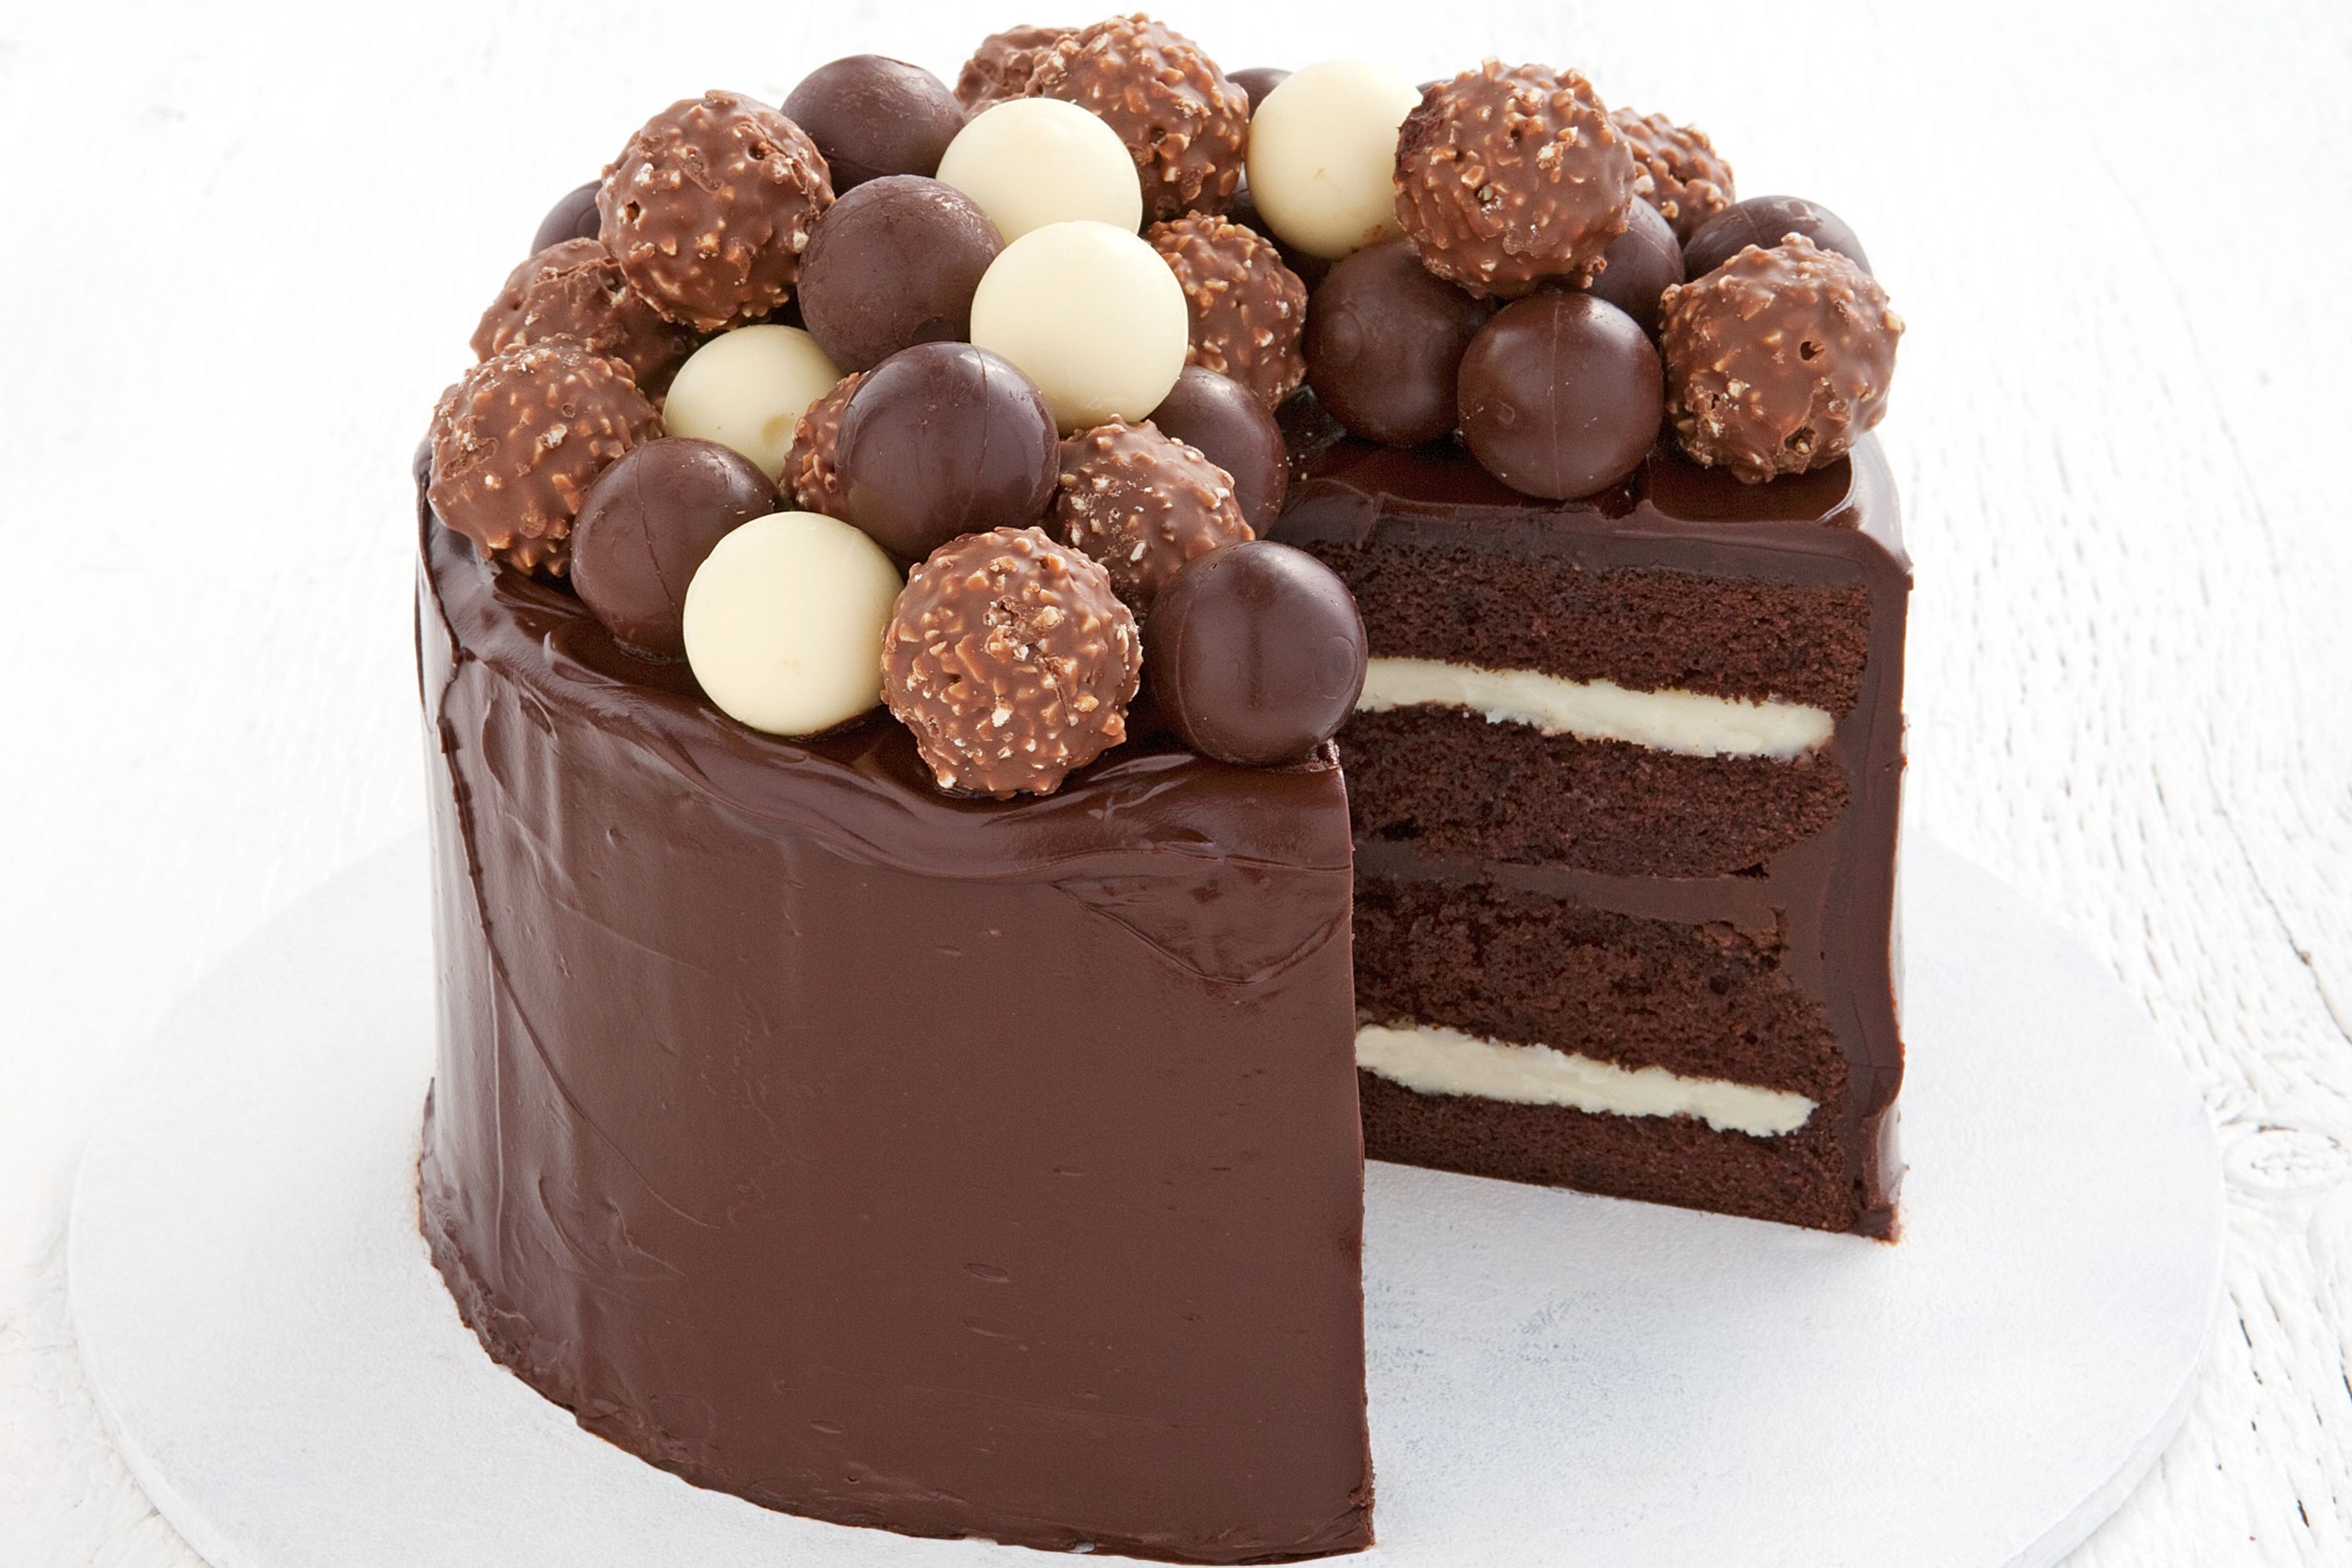 homemade-chocolate-cake-85524-1